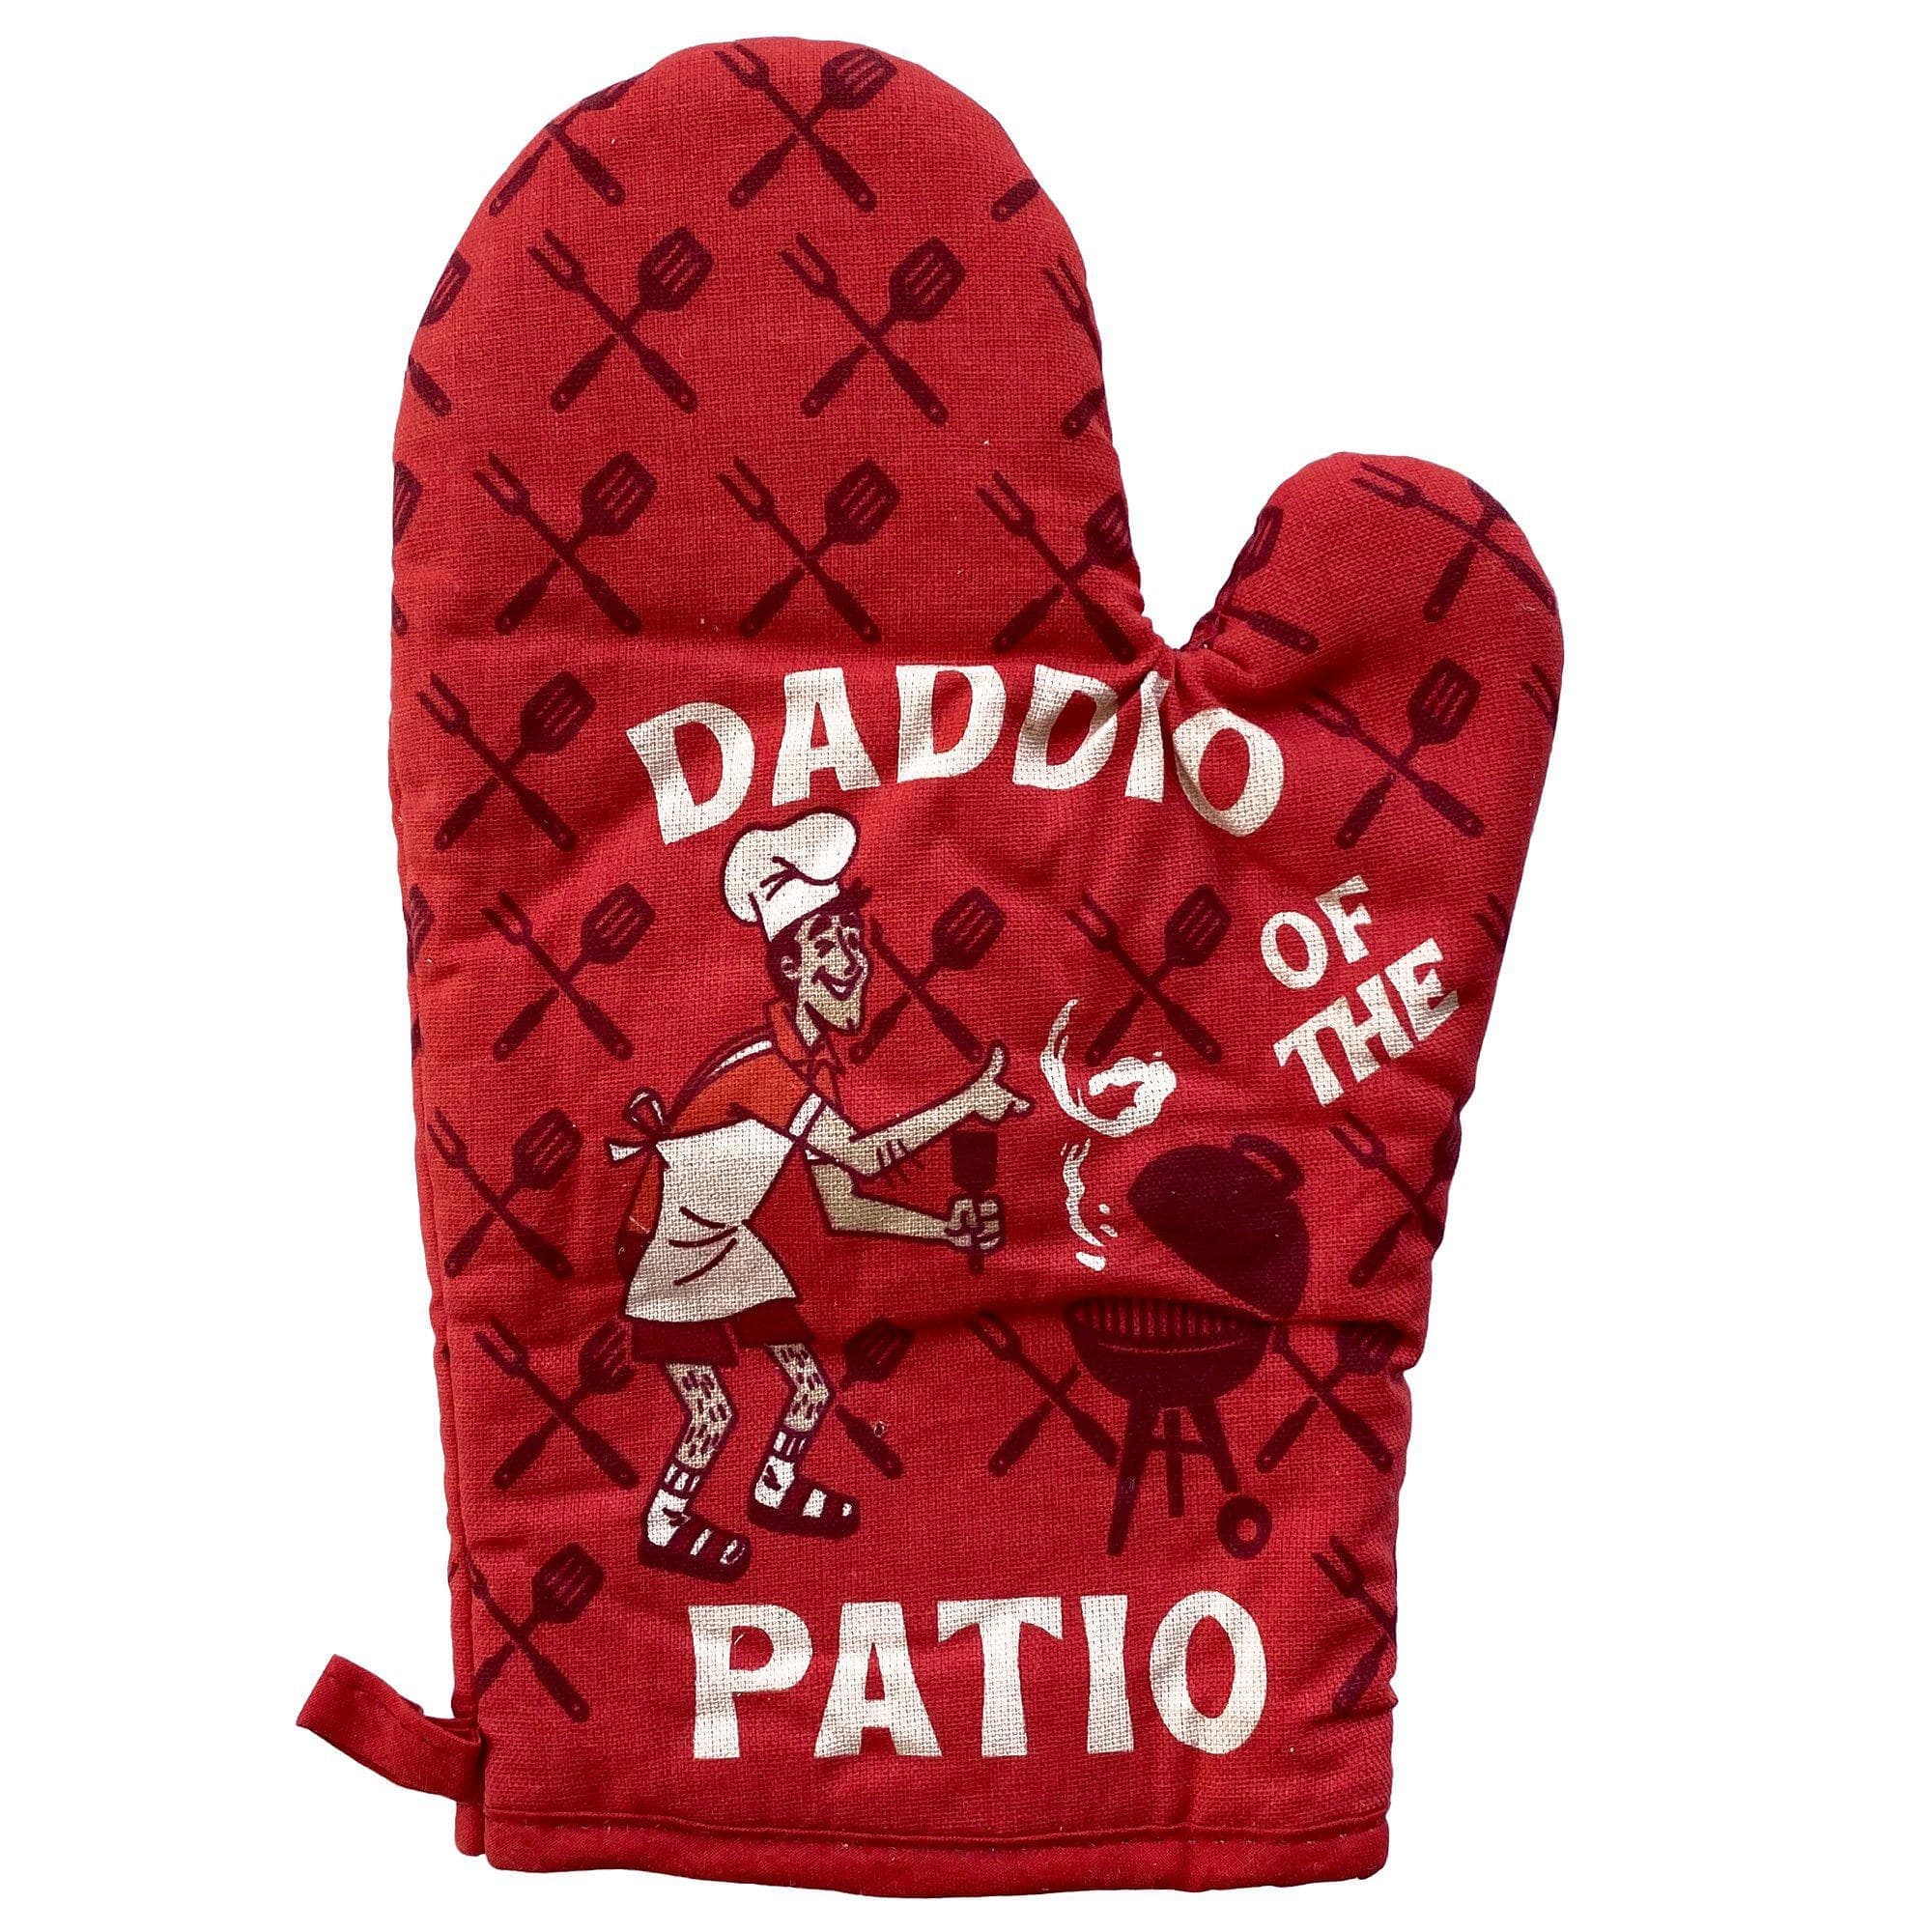 Daddio Of The Patio - Crazy Dog T-Shirts